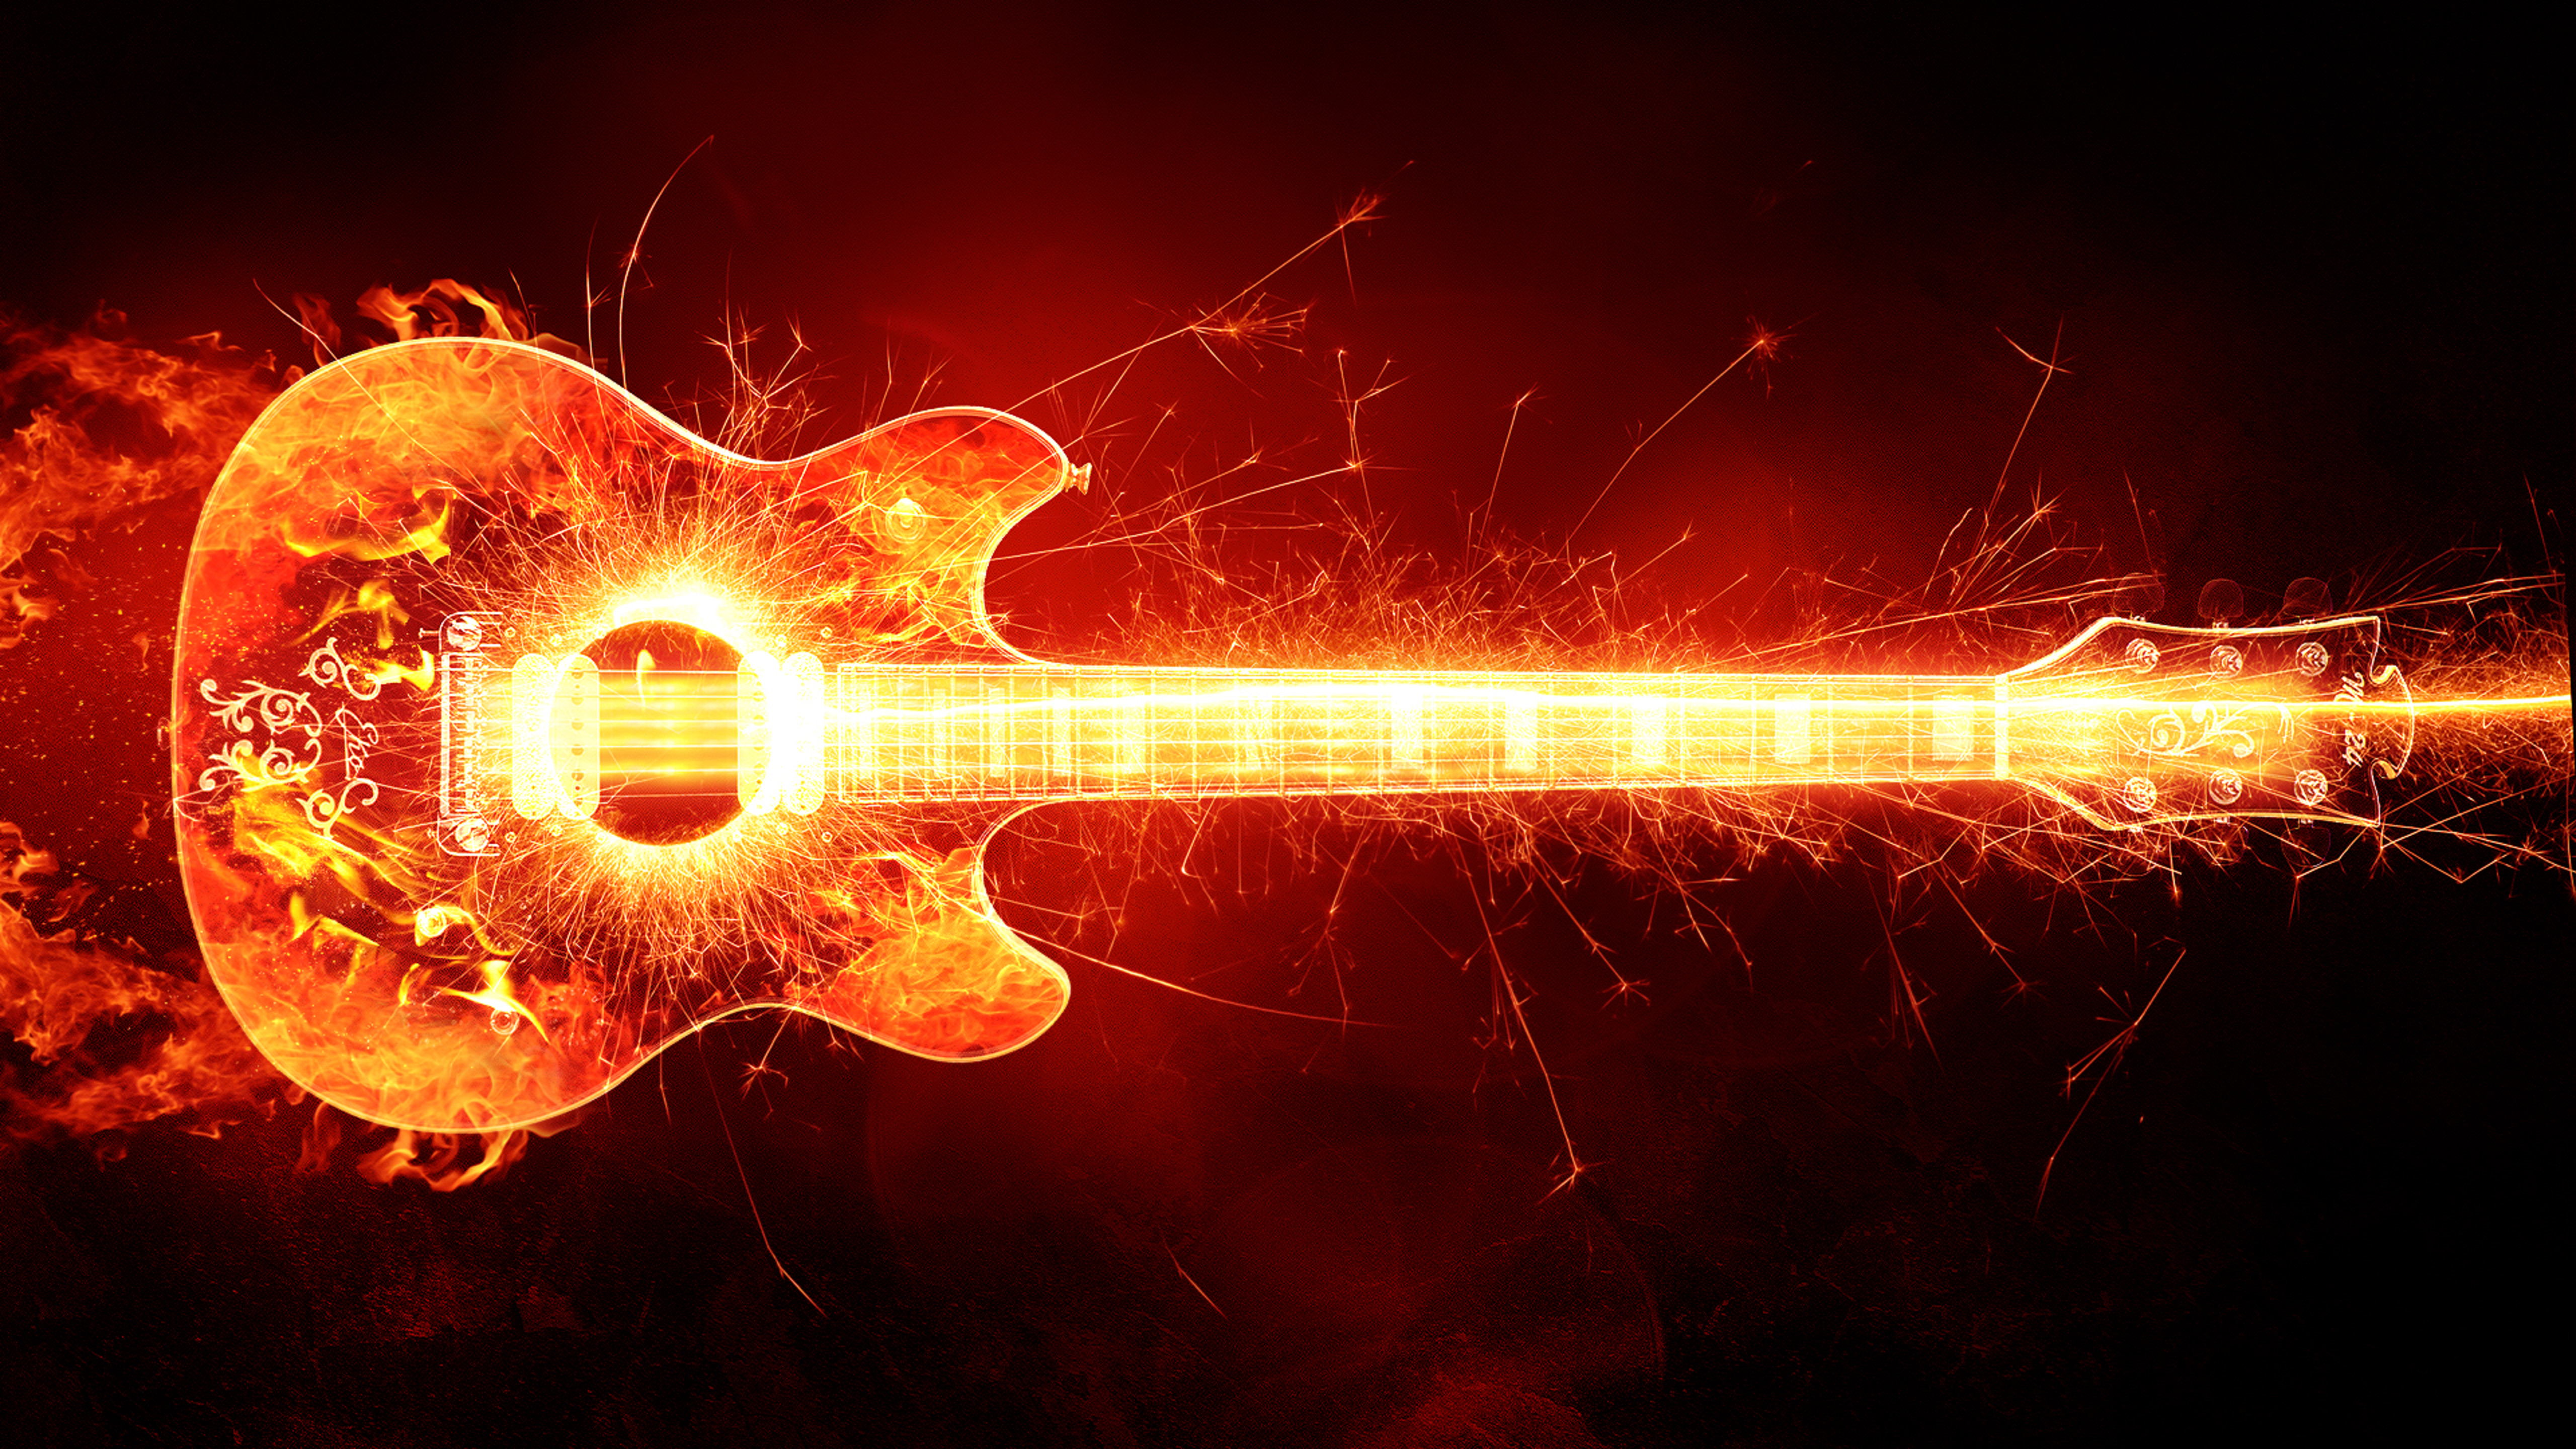 Guitar in flames Wallpaper Download 5120x2880